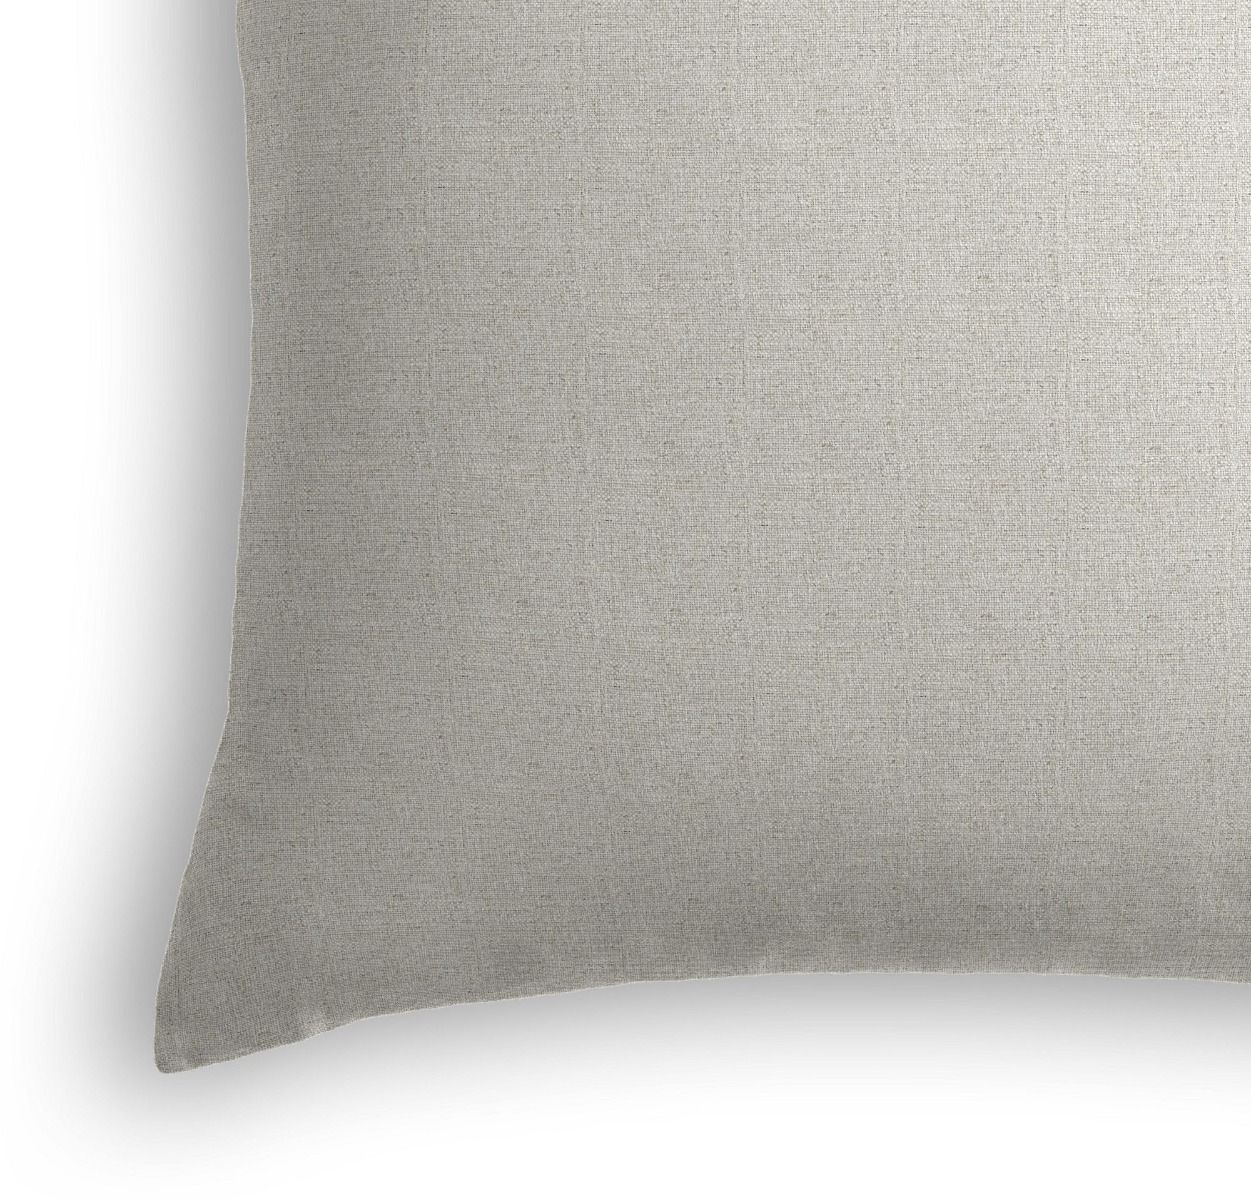 Classic Linen Pillow, Sandy Tan, 18" x 18" - Image 1